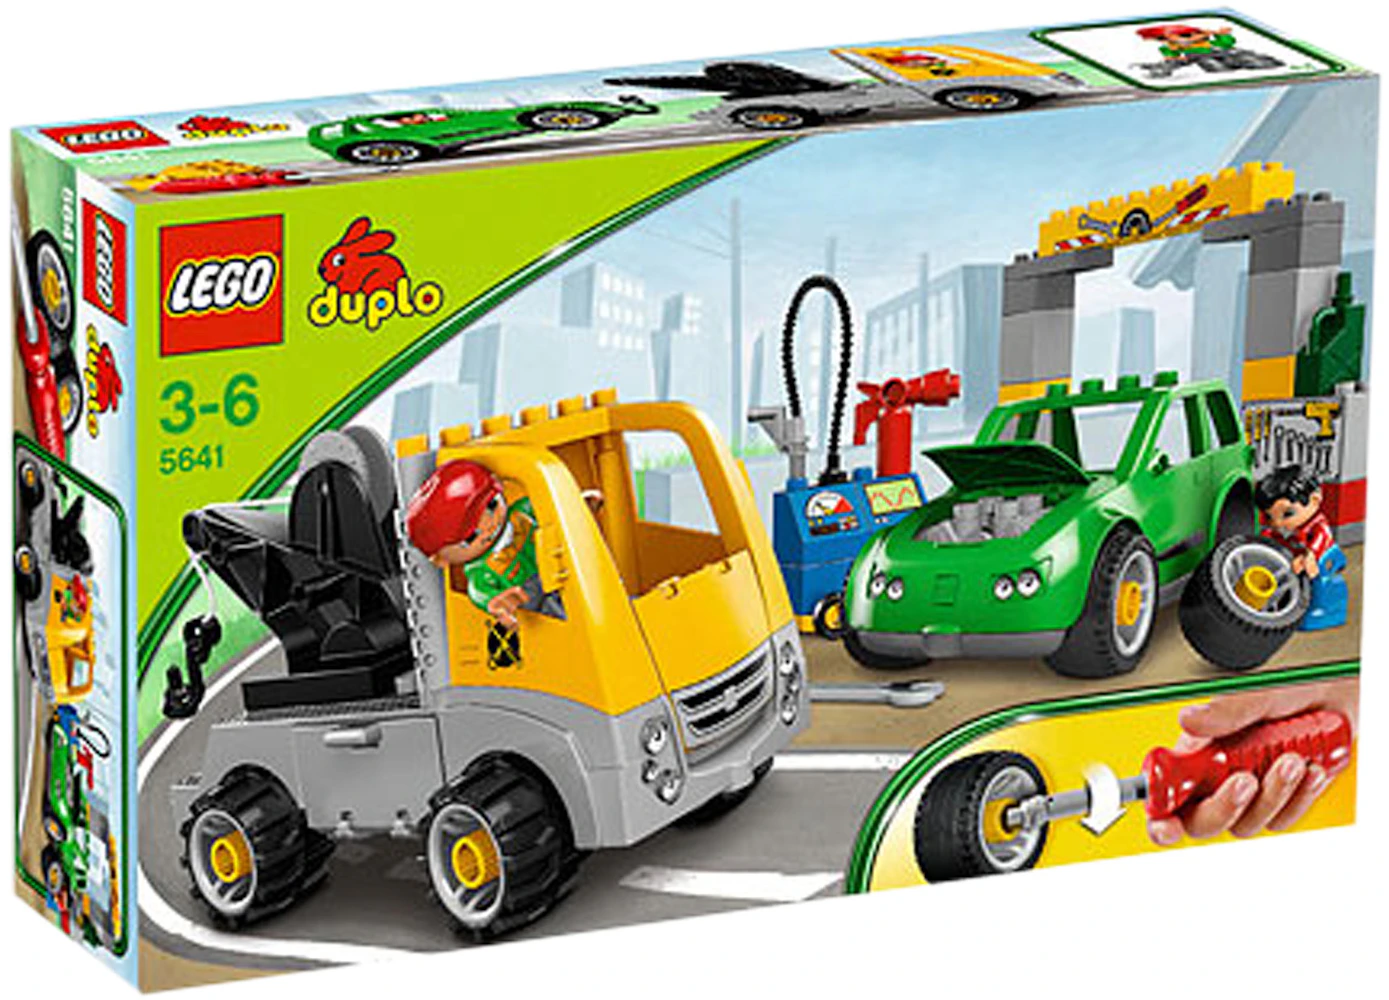 LEGO Duplo Busy Garage - SS09 - US